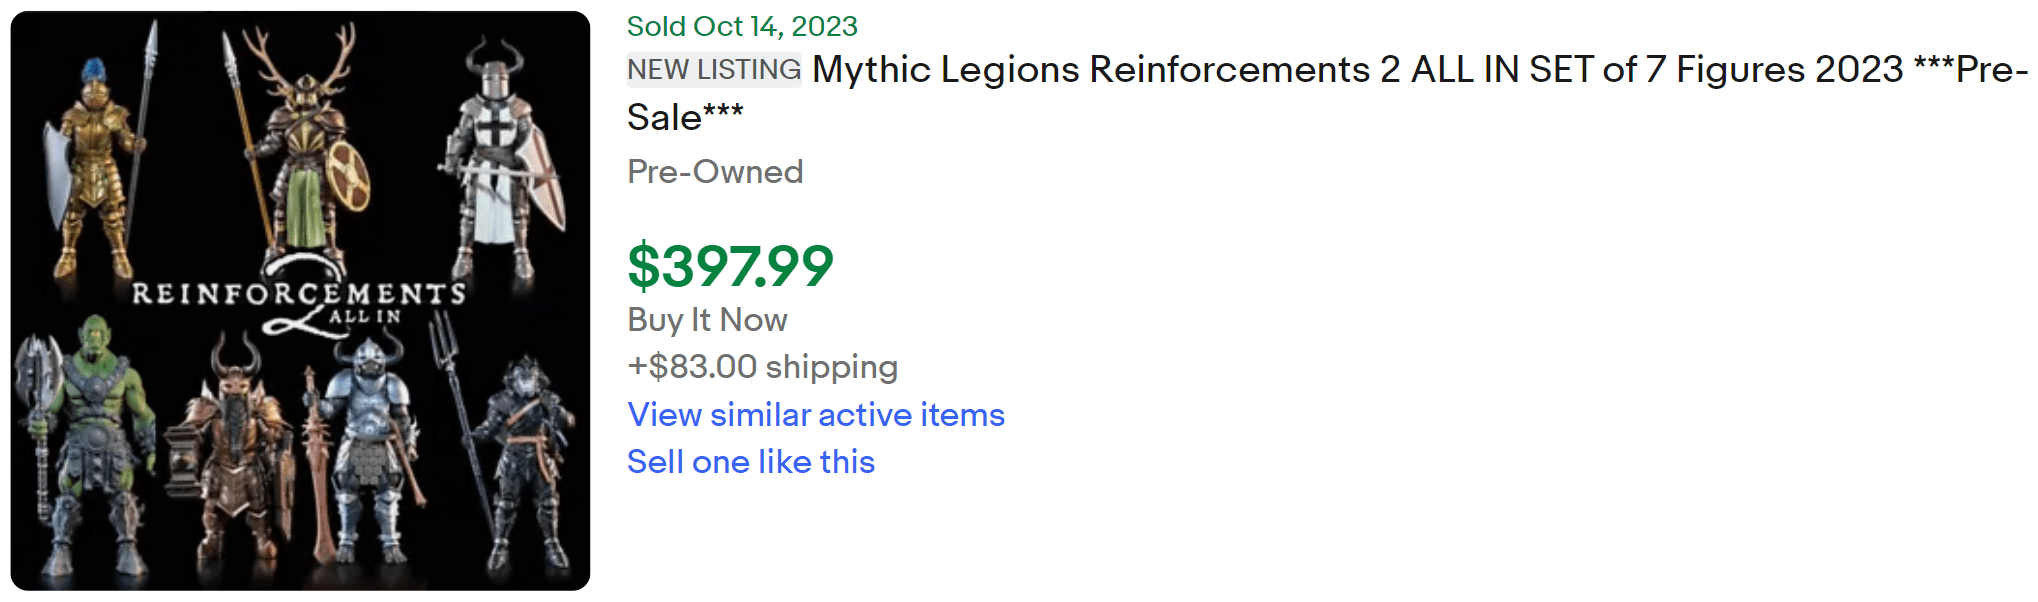 Mythic Legions Reinforcement 2 For Sale